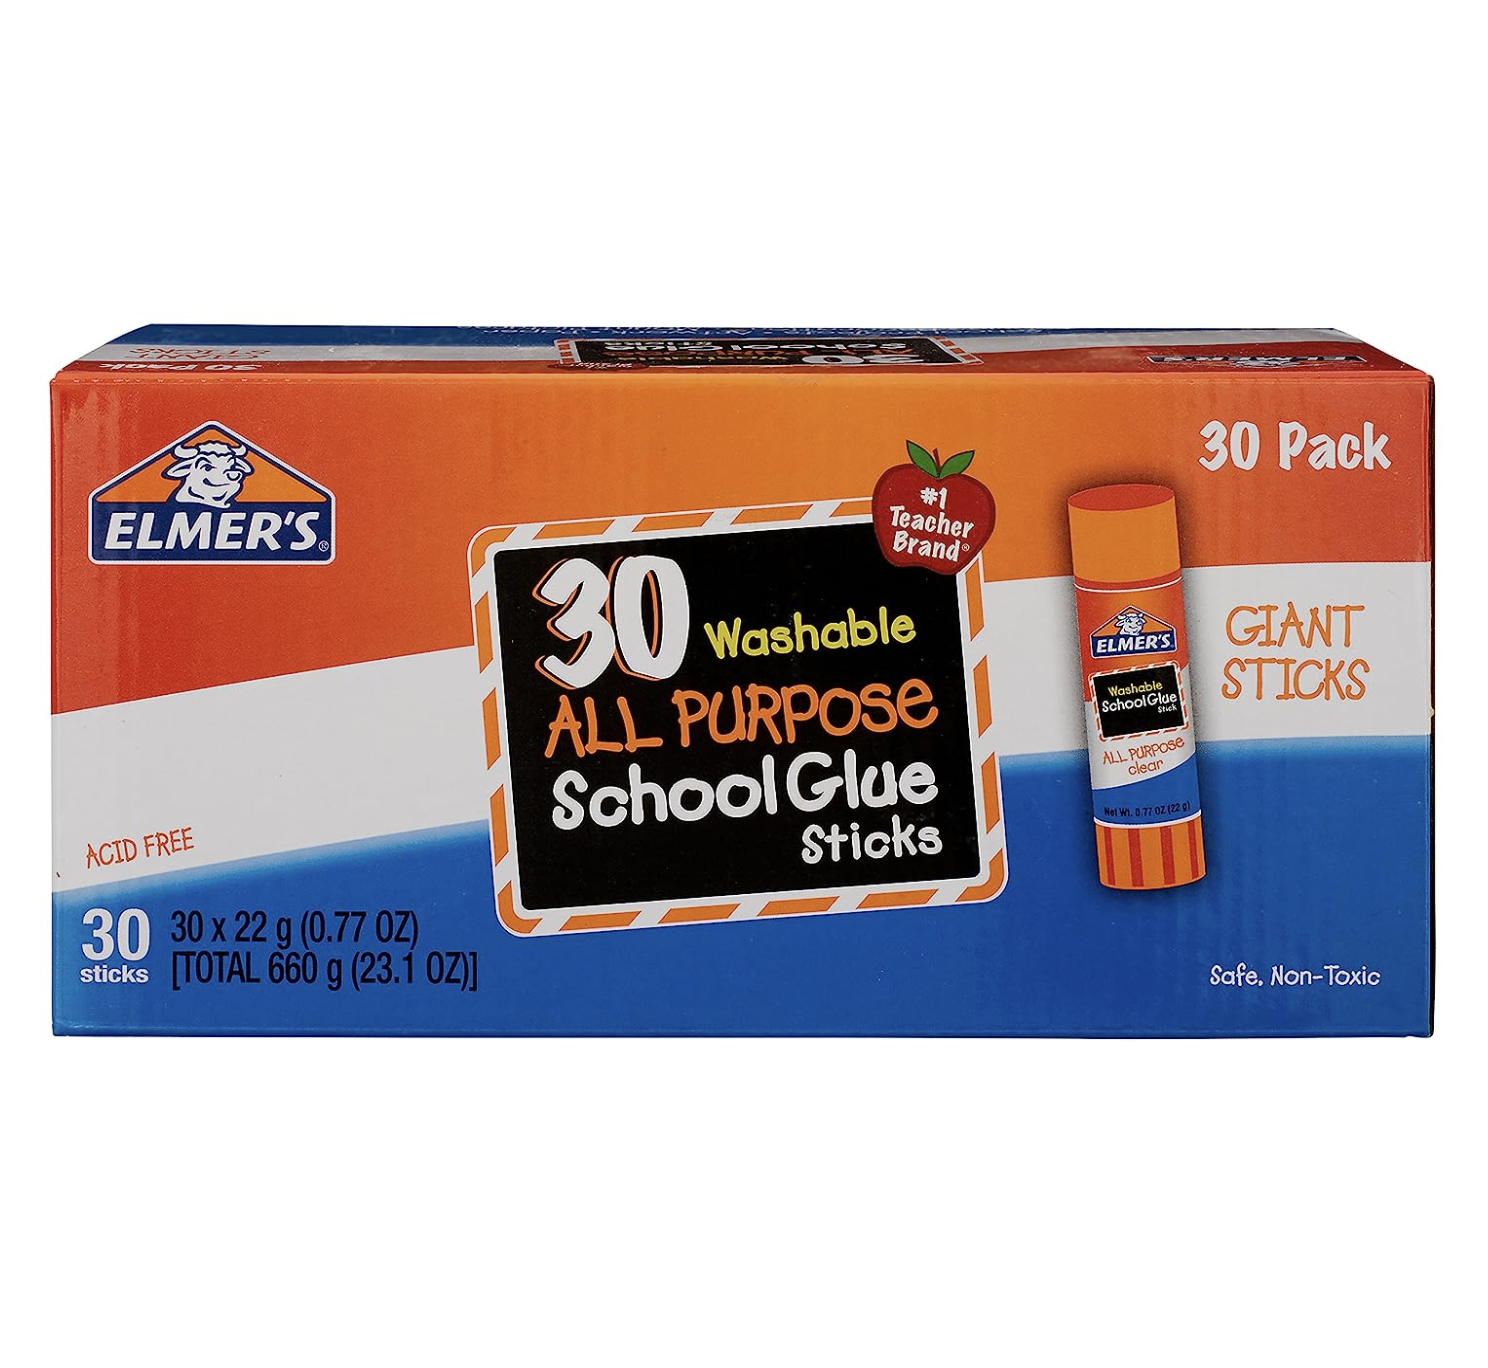 Elmer's All Purpose School Giant Glue Sticks 30-Pack only $16